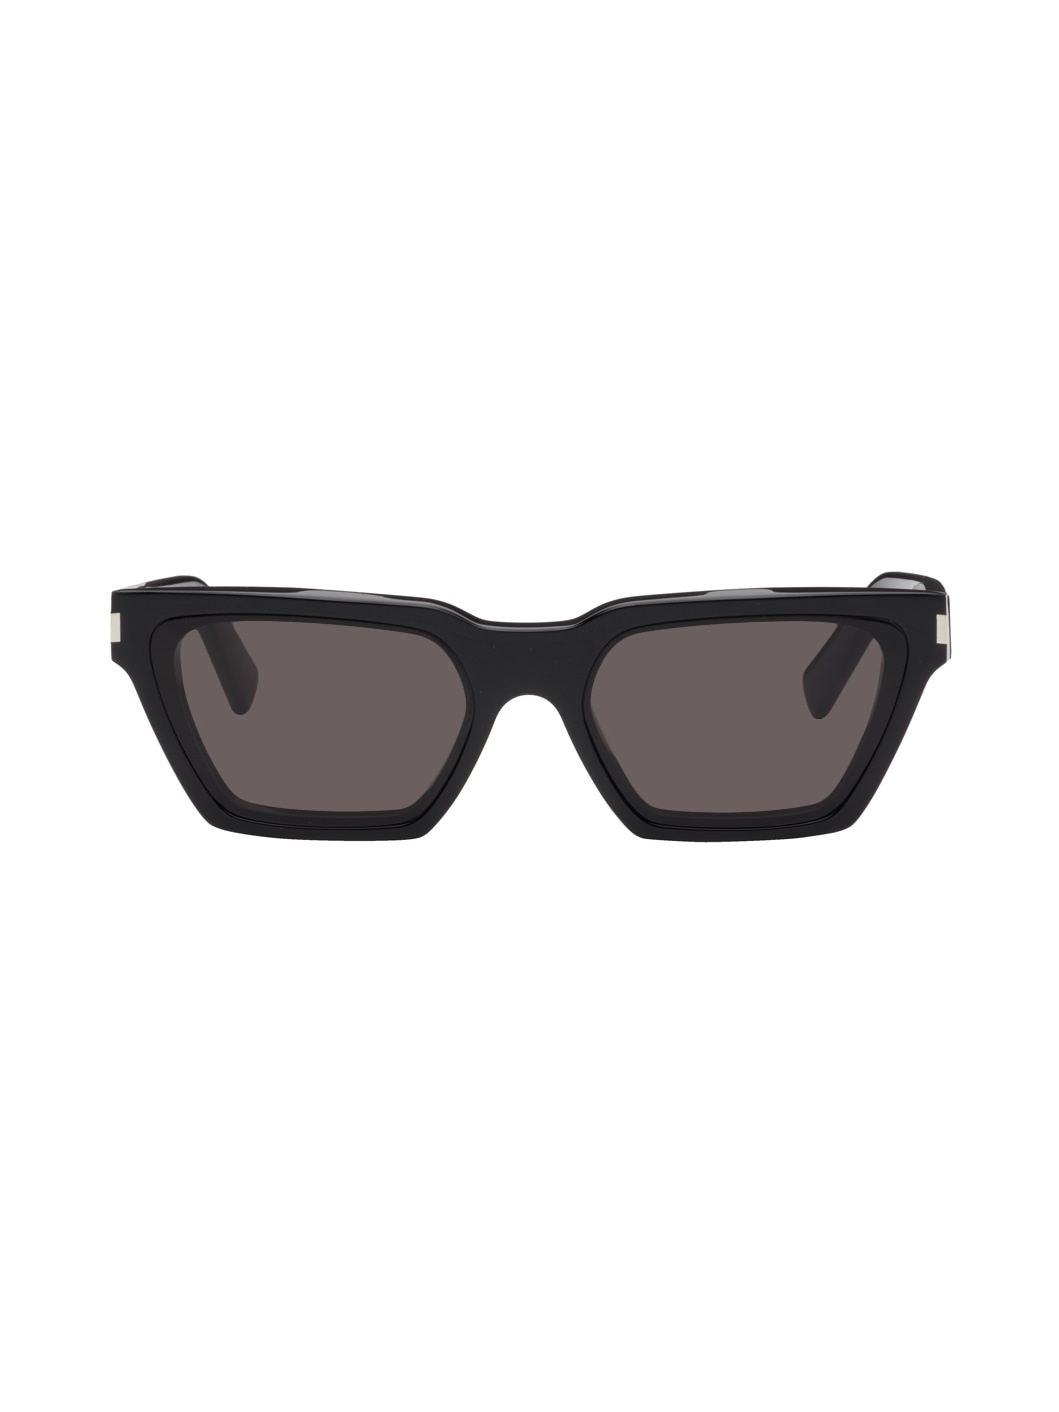 Black SL 633 Calista Sunglasses - 1